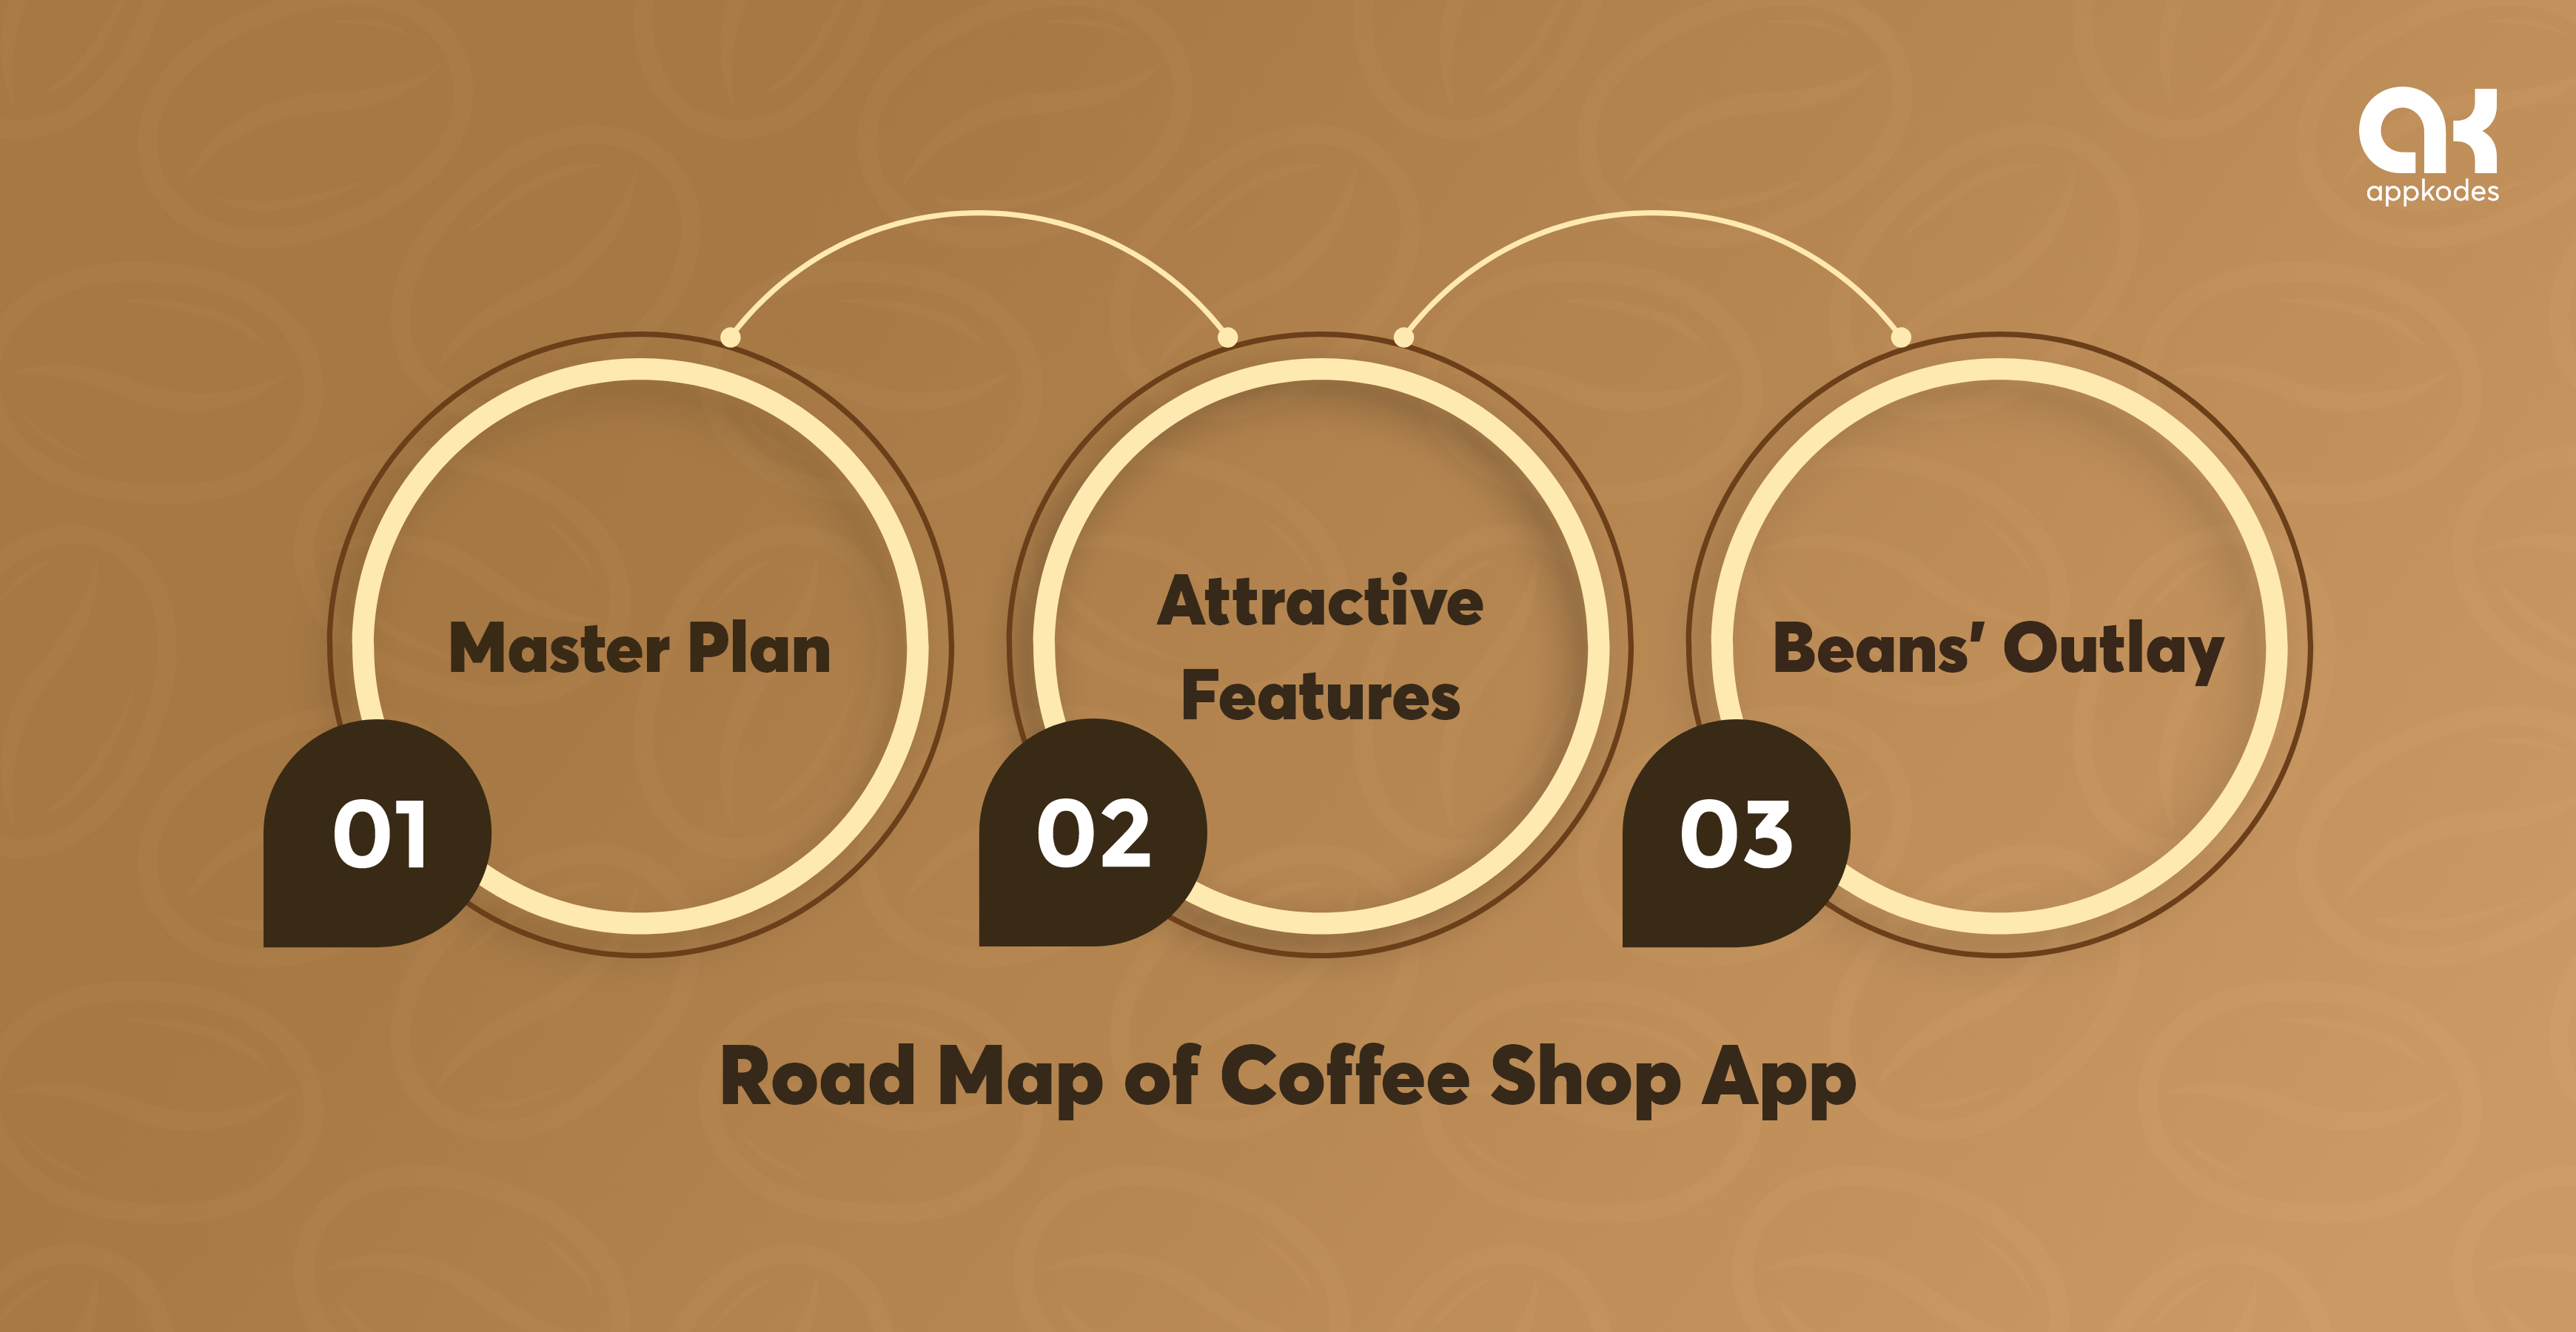 Road Map of Coffee Shop App